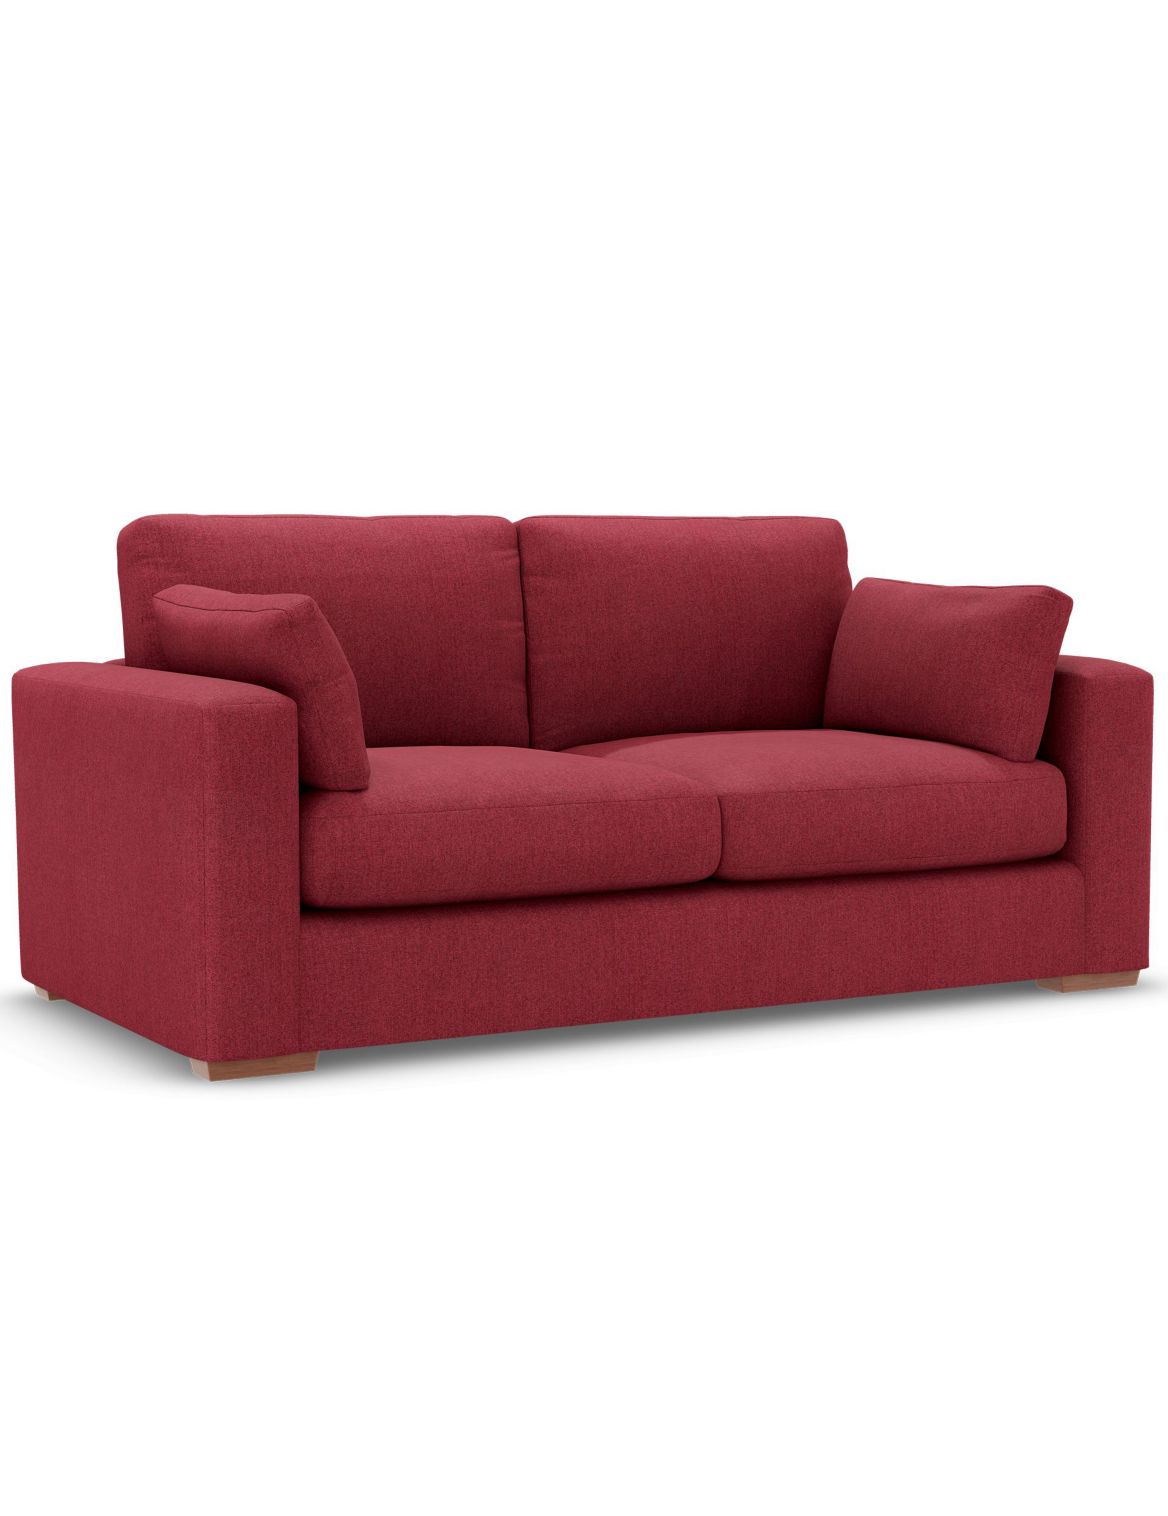 Boston Large Sofa red